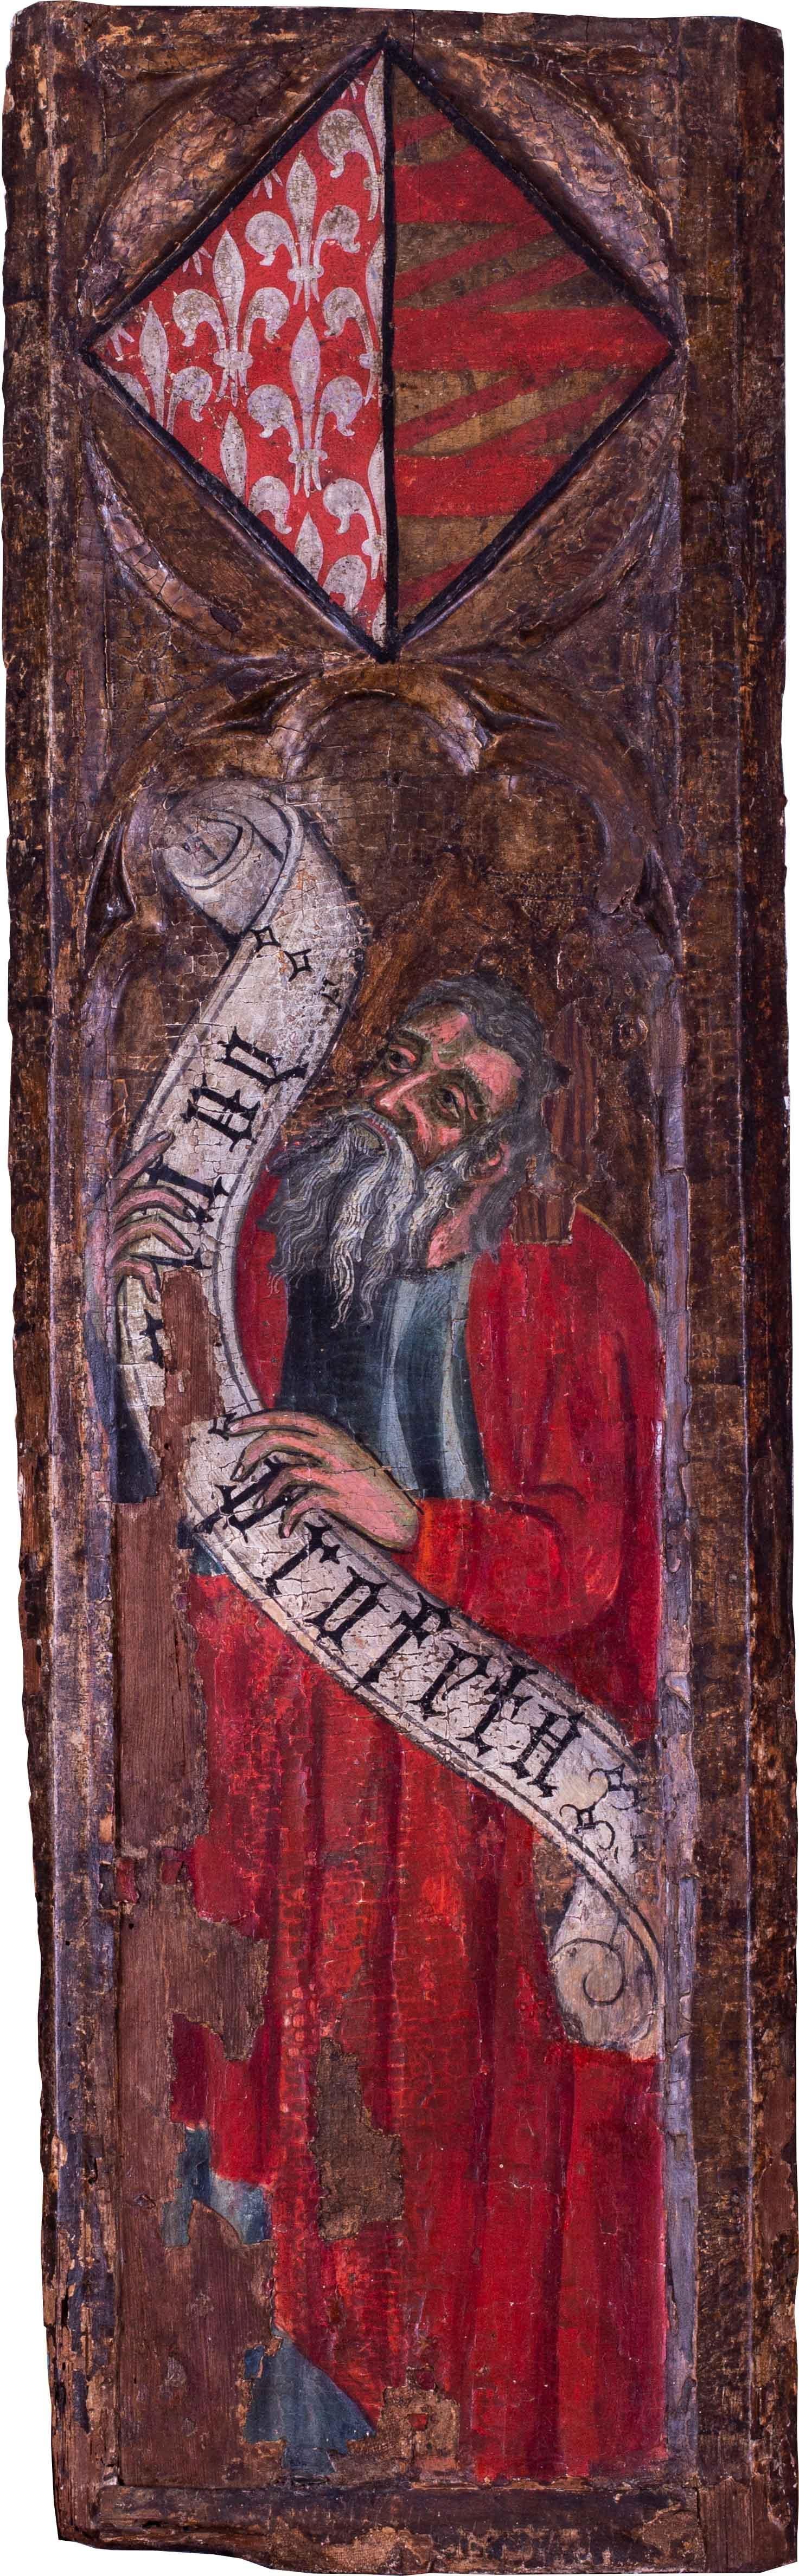 Circa 1400, Spanish school of 'The Prophet Daniel', tempera on panel with gildin